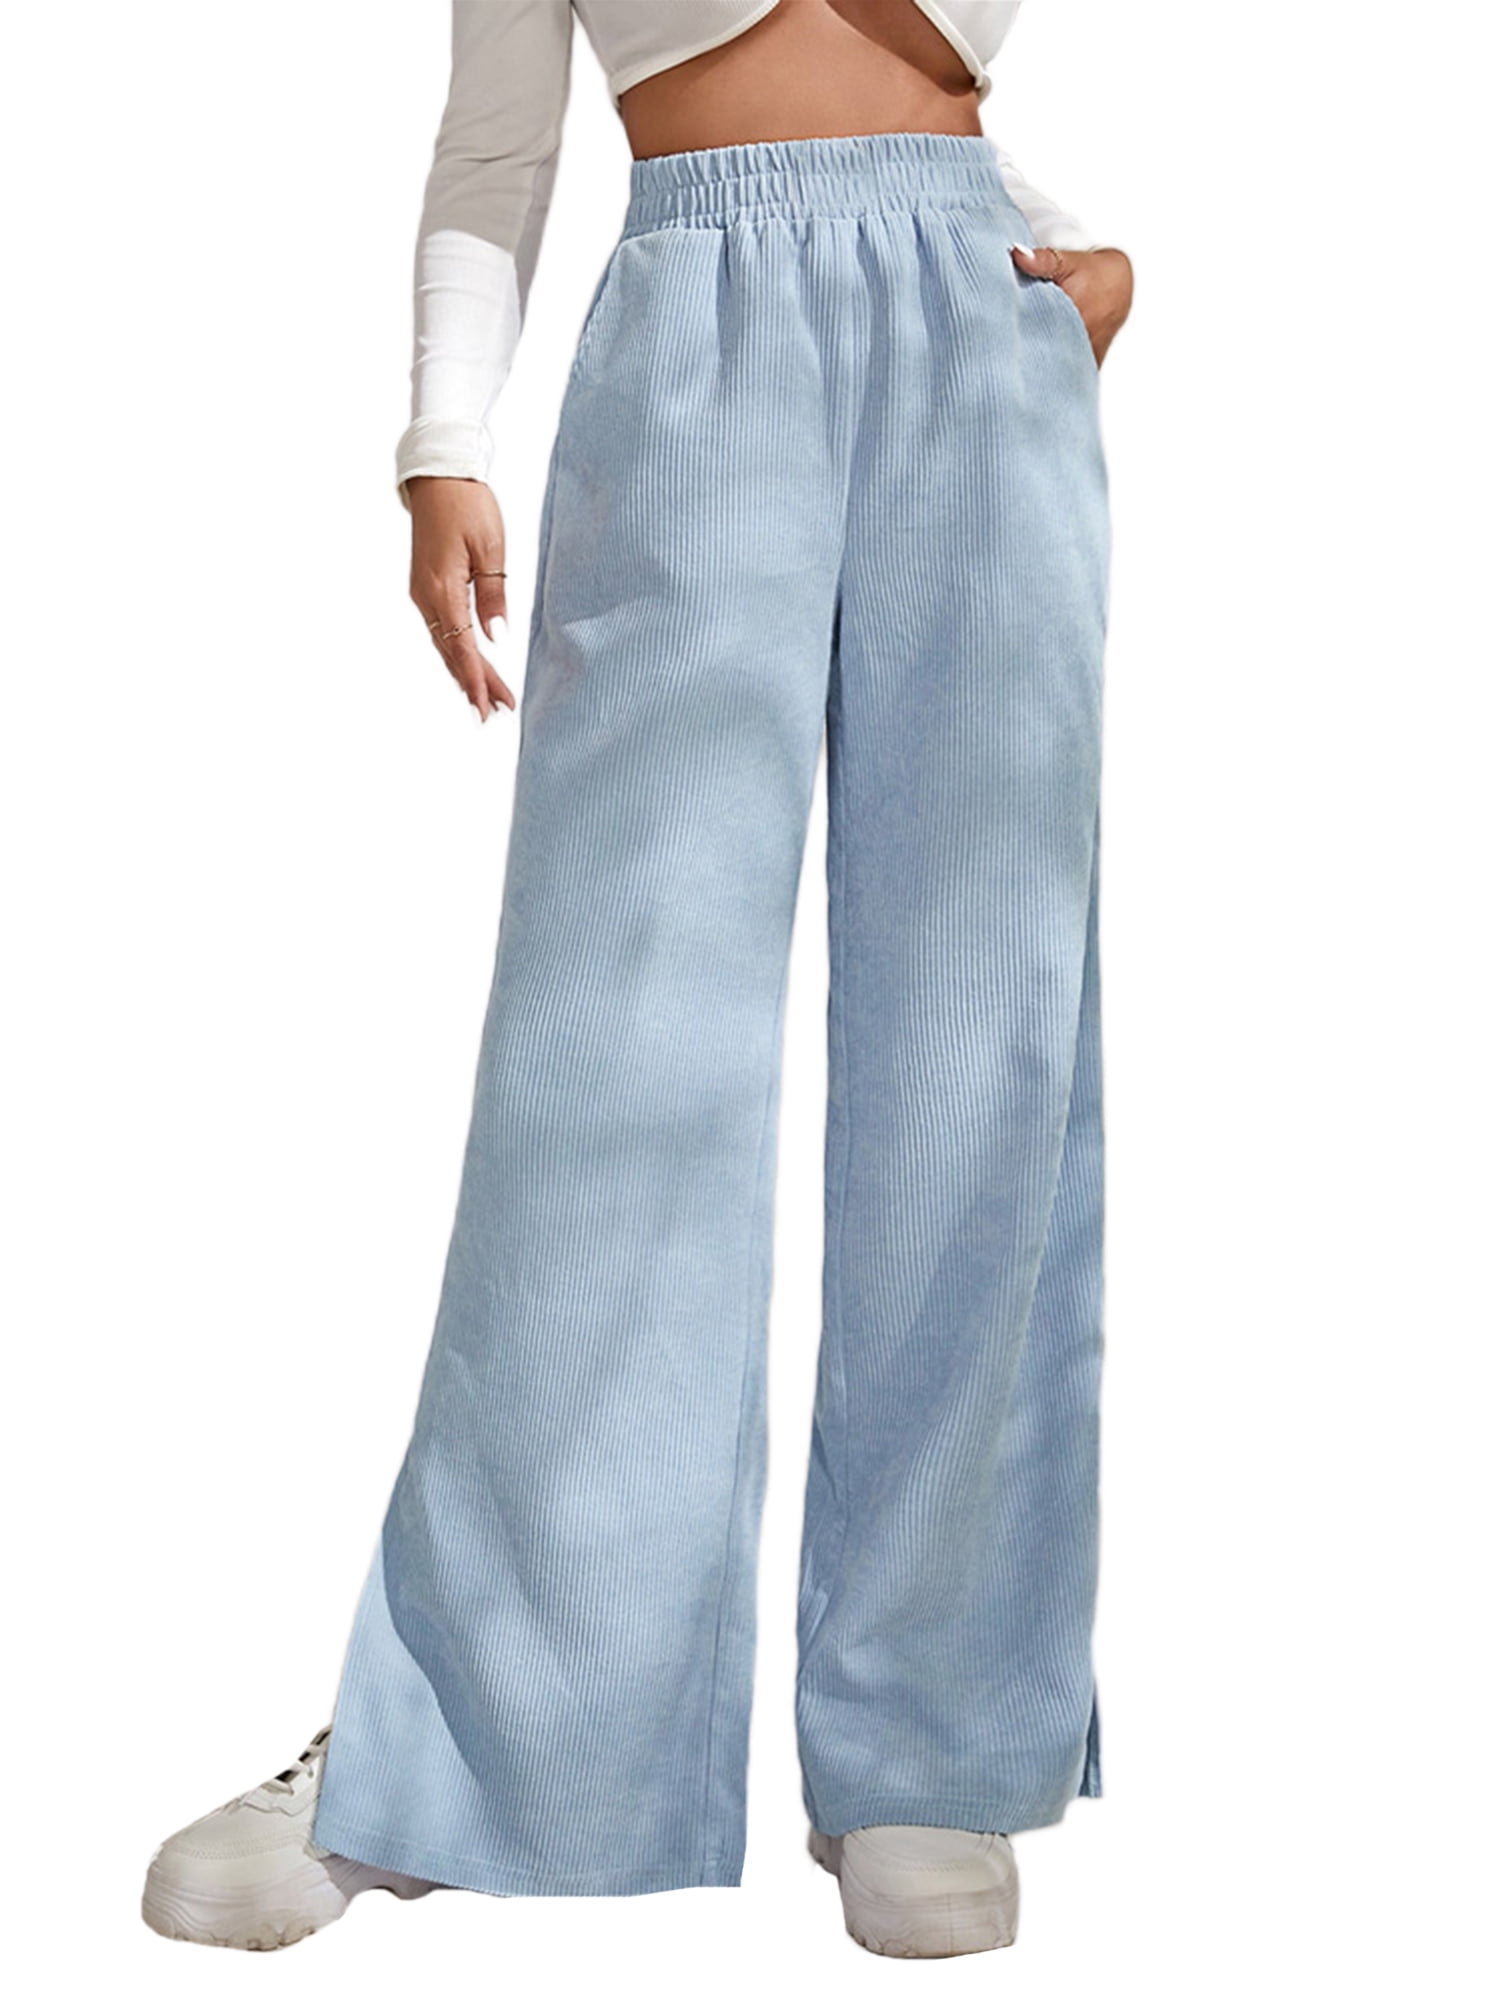 Embroidered yoga harem pants loose fit comfy free movement  Стильные  наряды Одежда для женщин Выкройка брюк